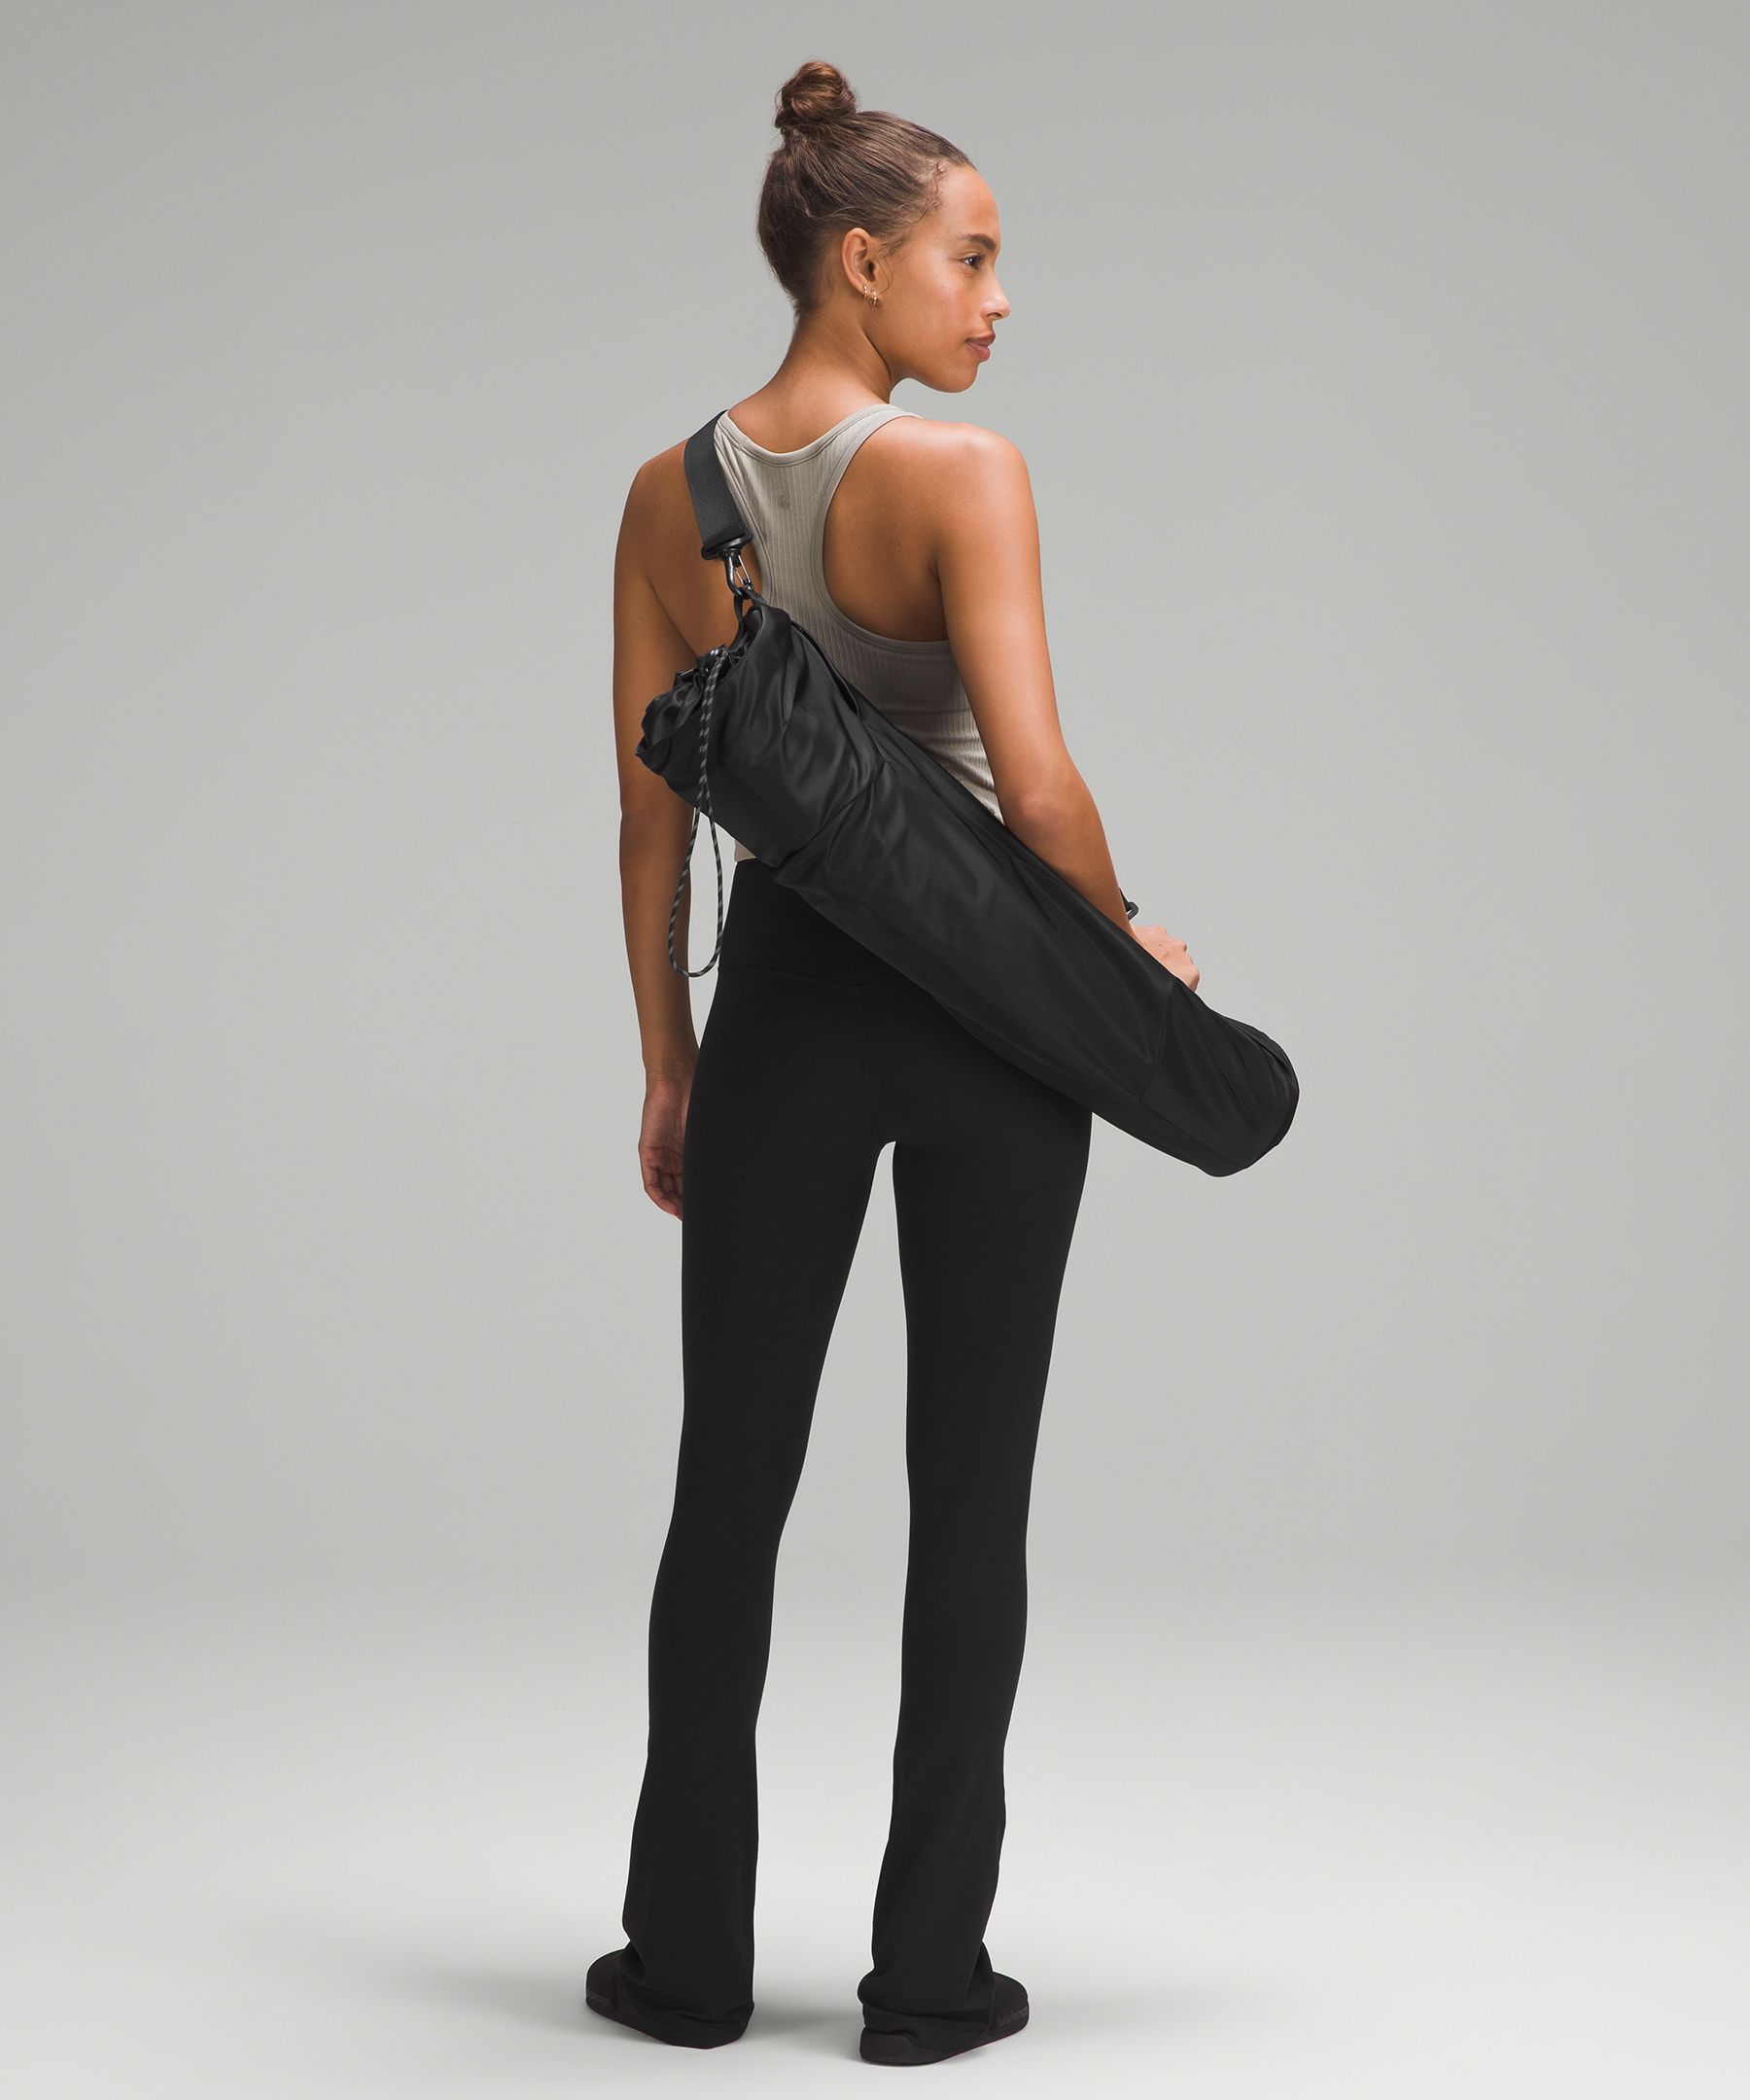 lululemon athletica Yoga Mat Bags